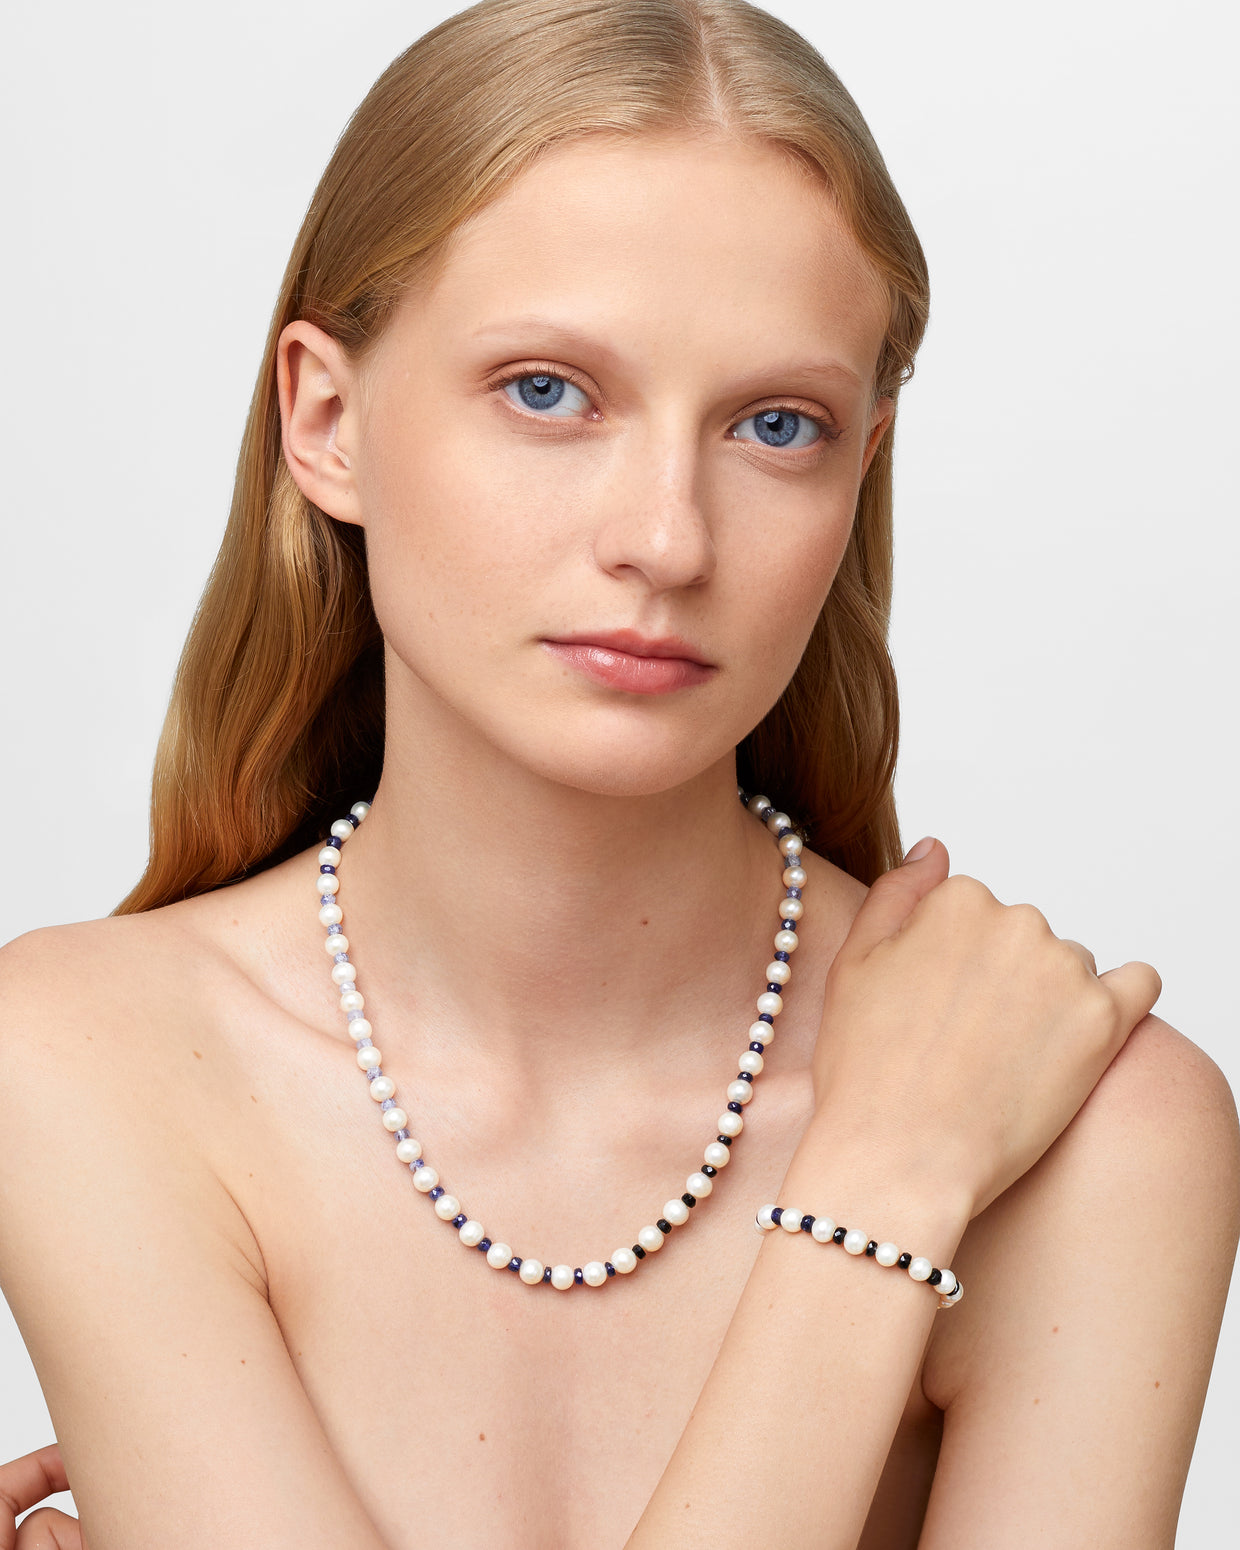 Ocean Jumbo Blue Sapphire Pearl Necklace